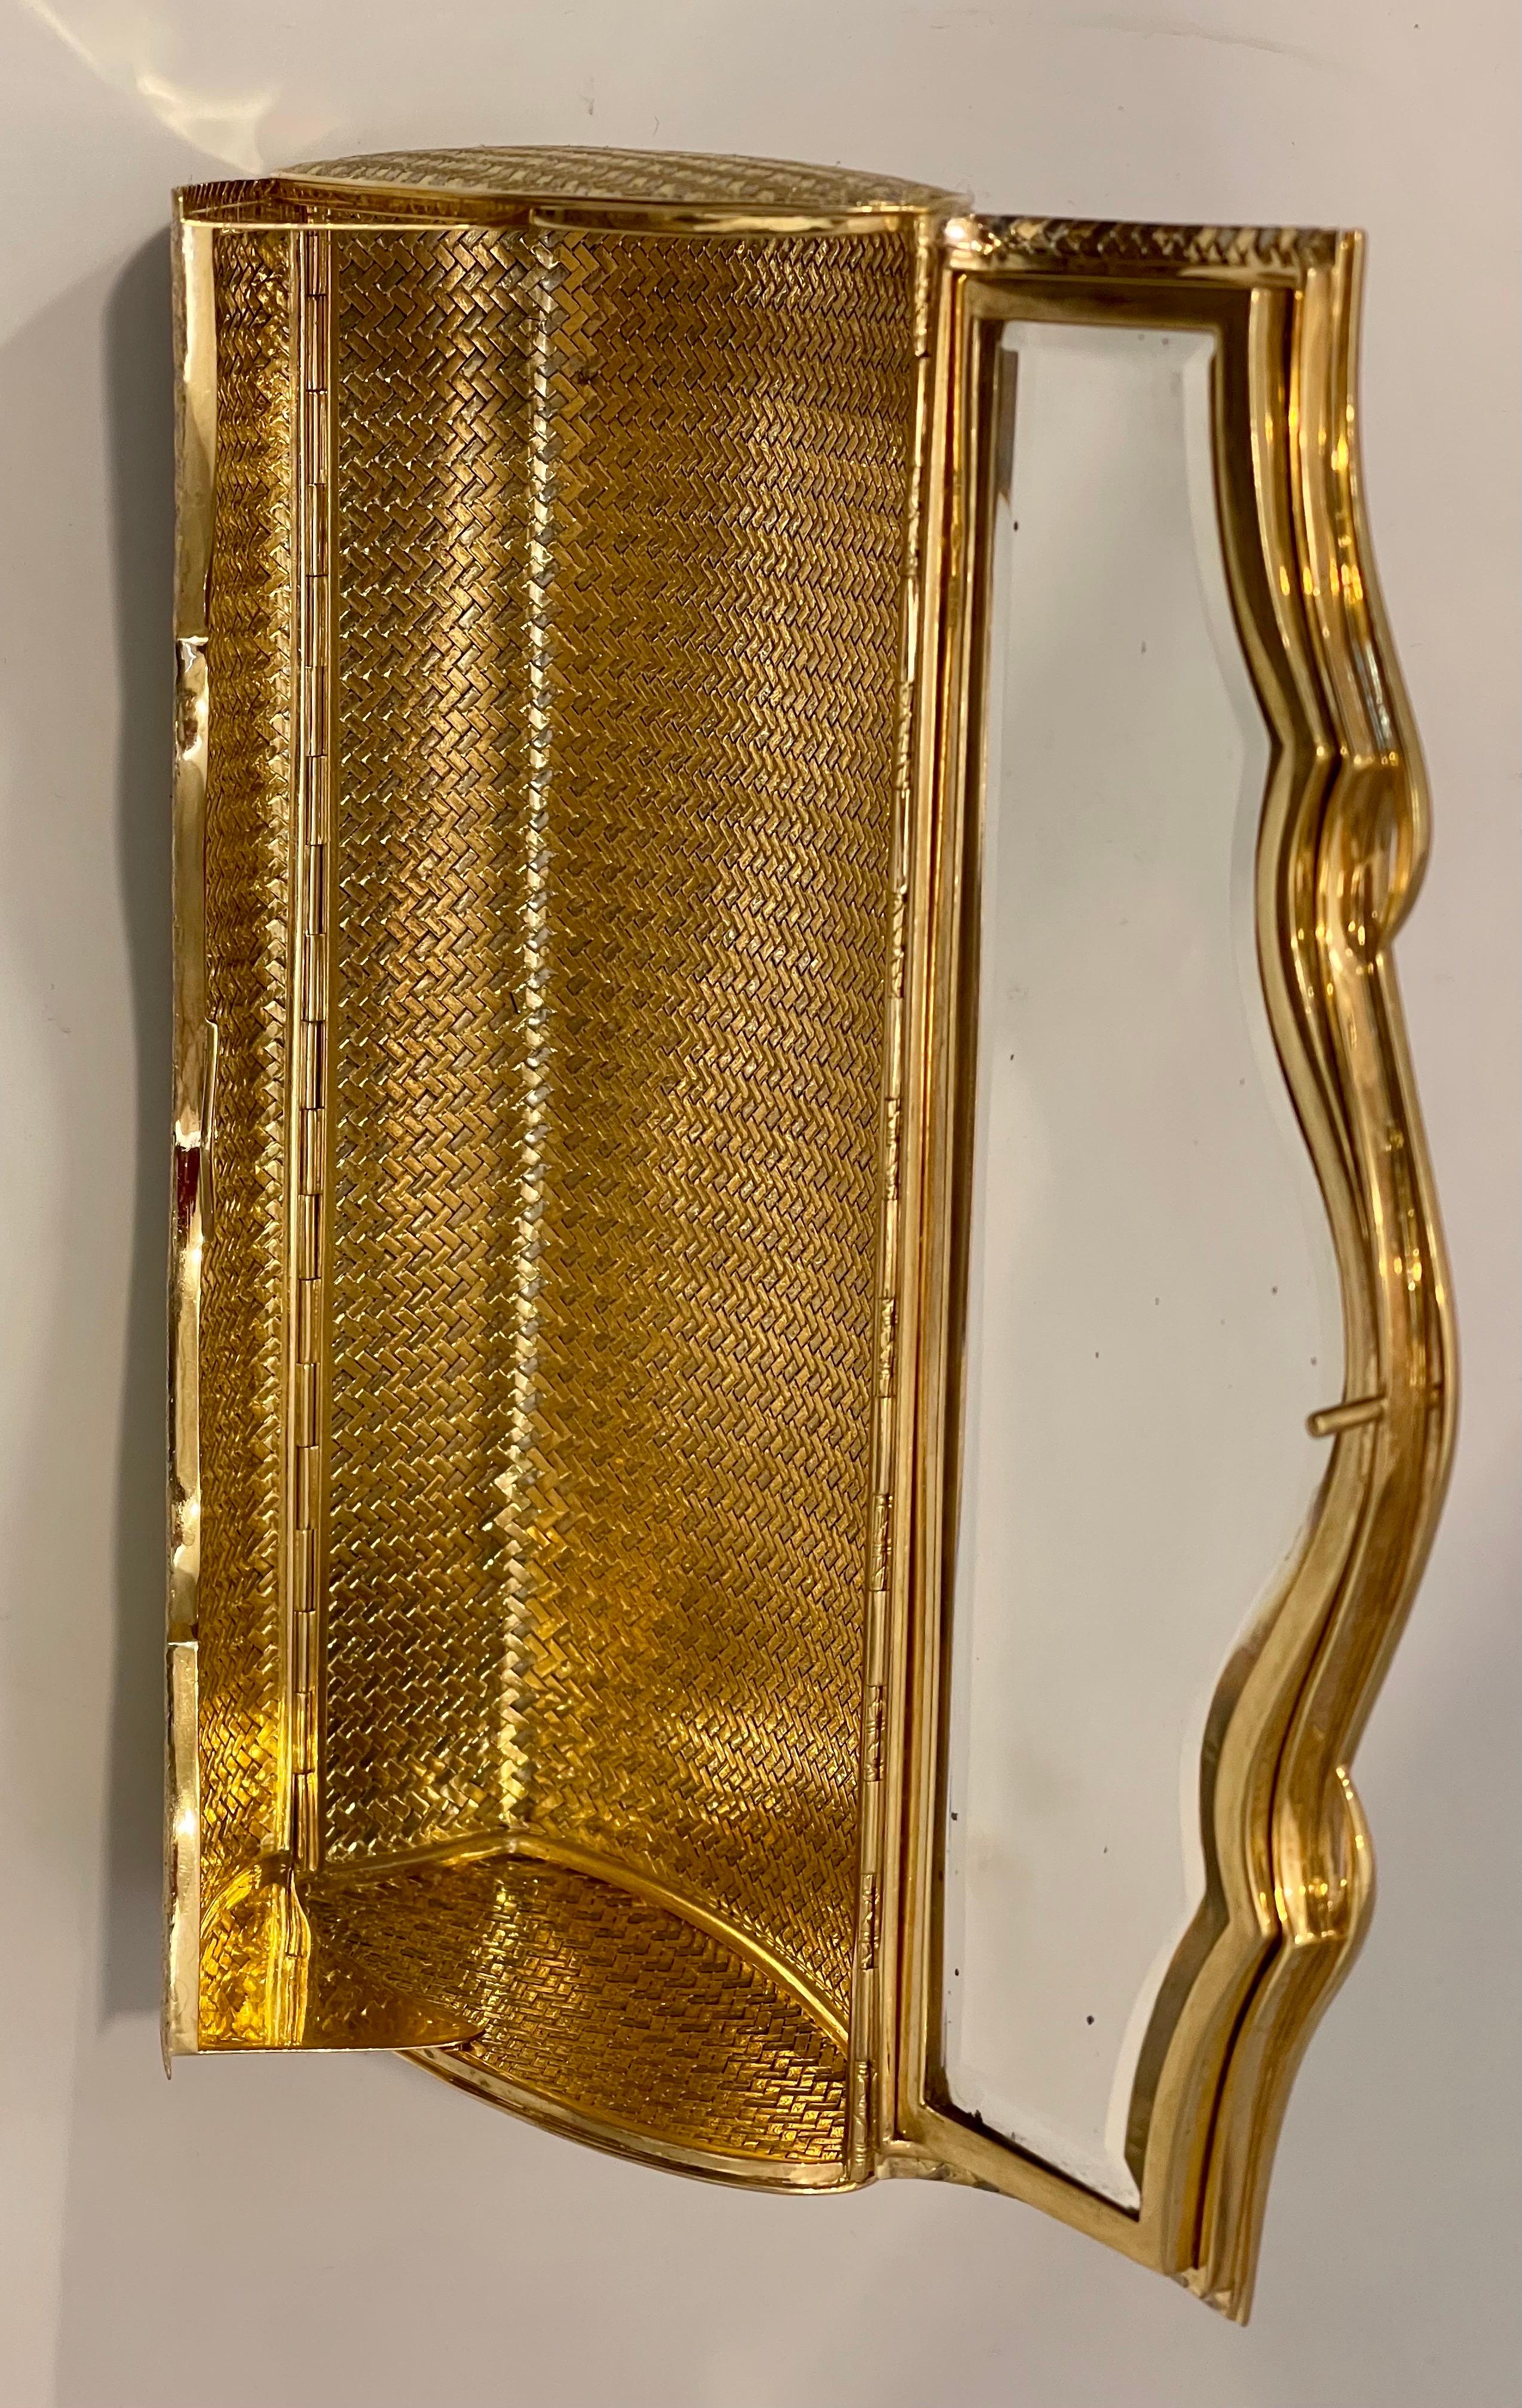 Van Cleef & Arpels 18K Yellow Gold Mesh Clutch Handbag with Mirror Inside, Rare For Sale 2